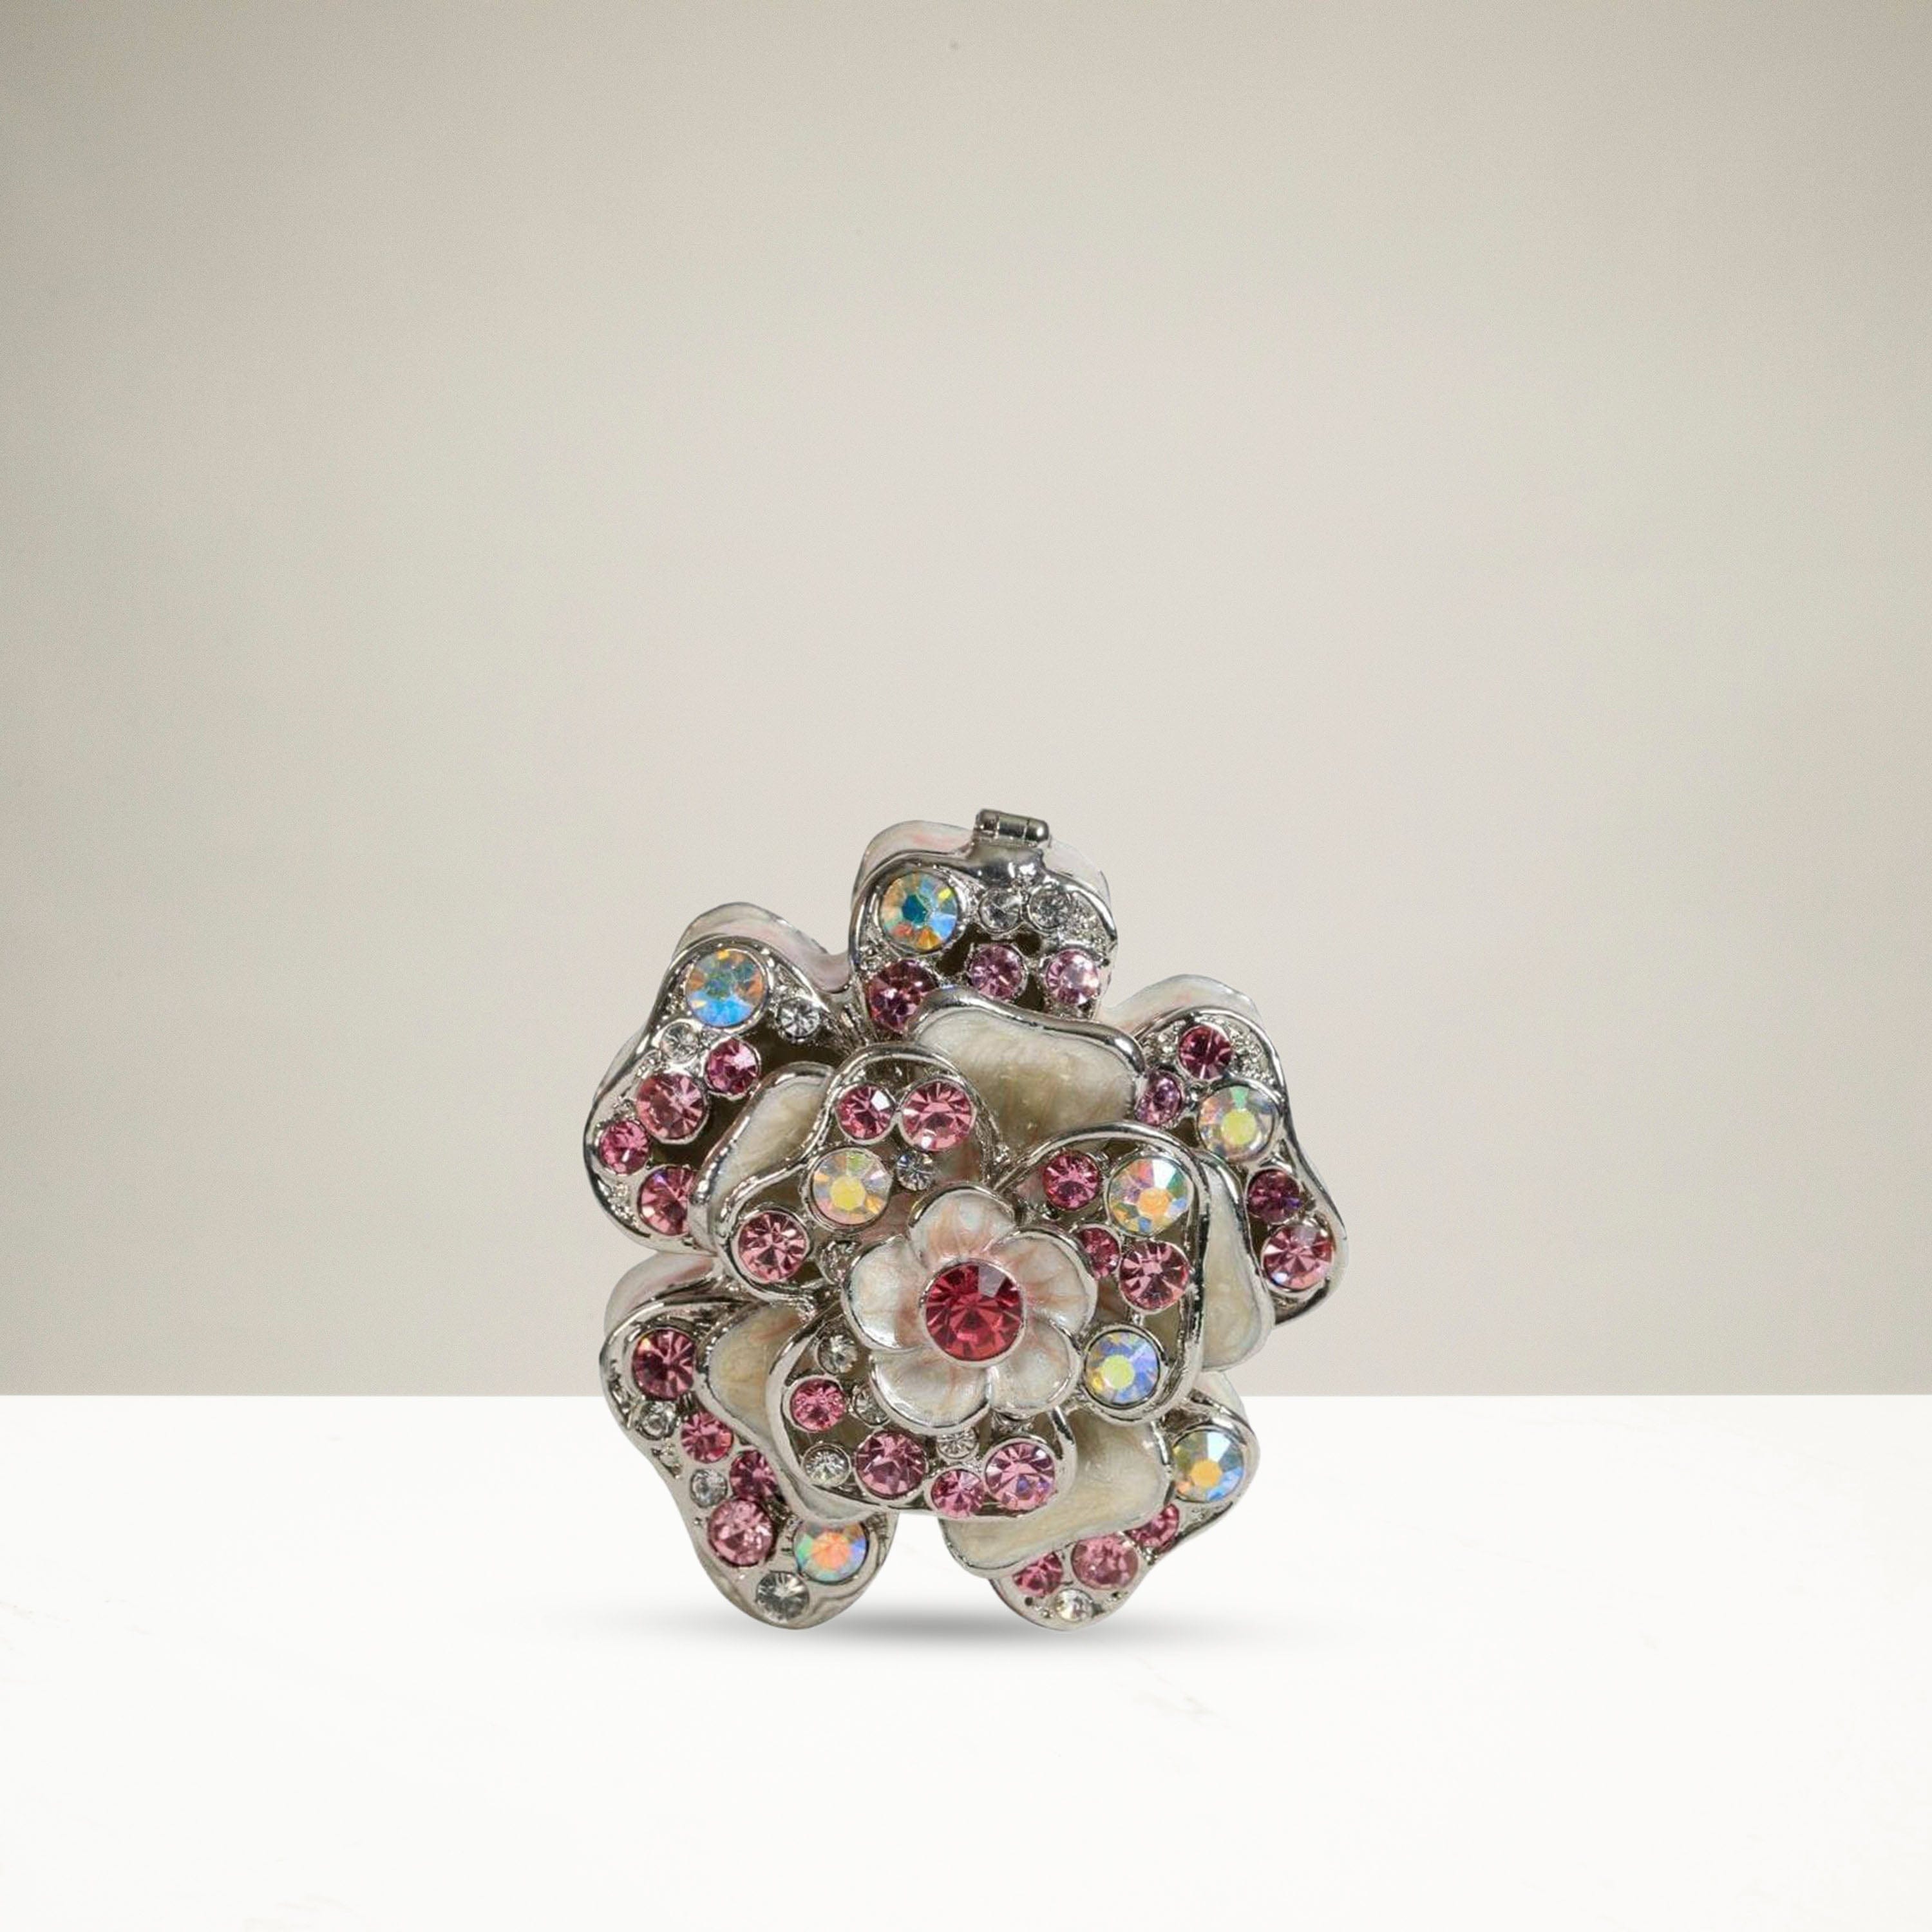 Kalifano Vanity Figurine Pink Flower Keepsake Box made with Crystals SVA-037